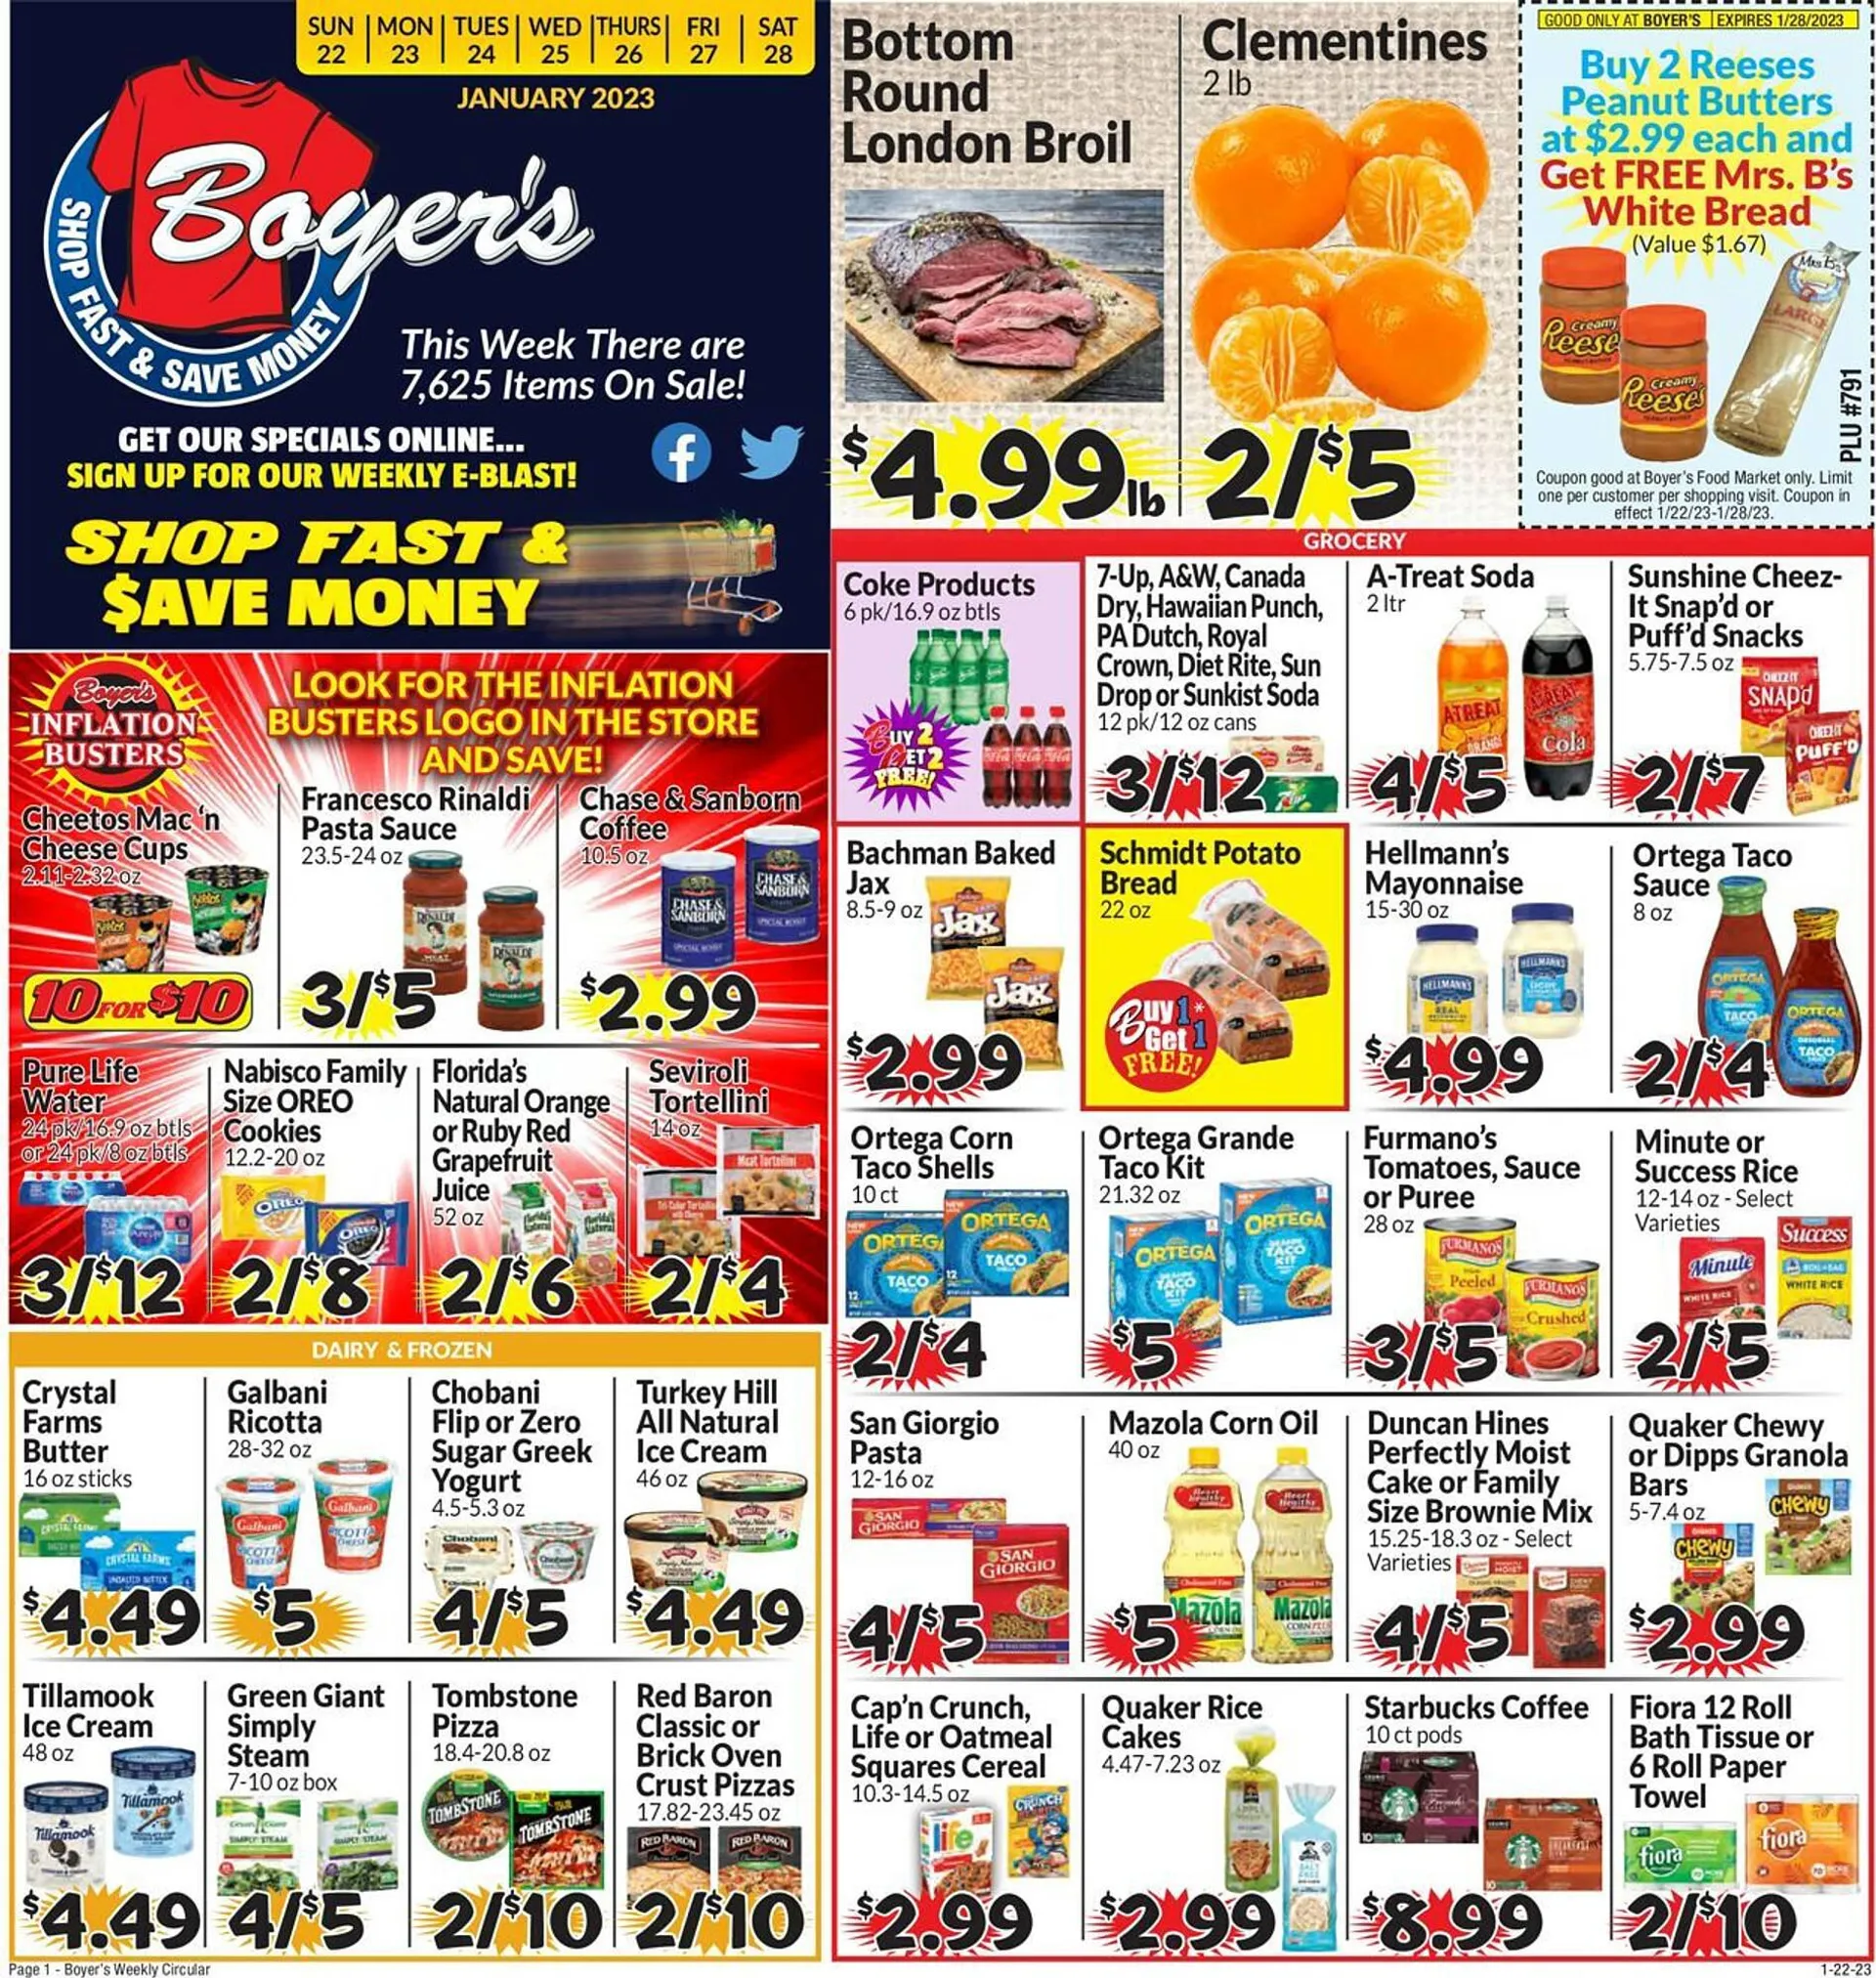 Boyers Food Markets ad - 3